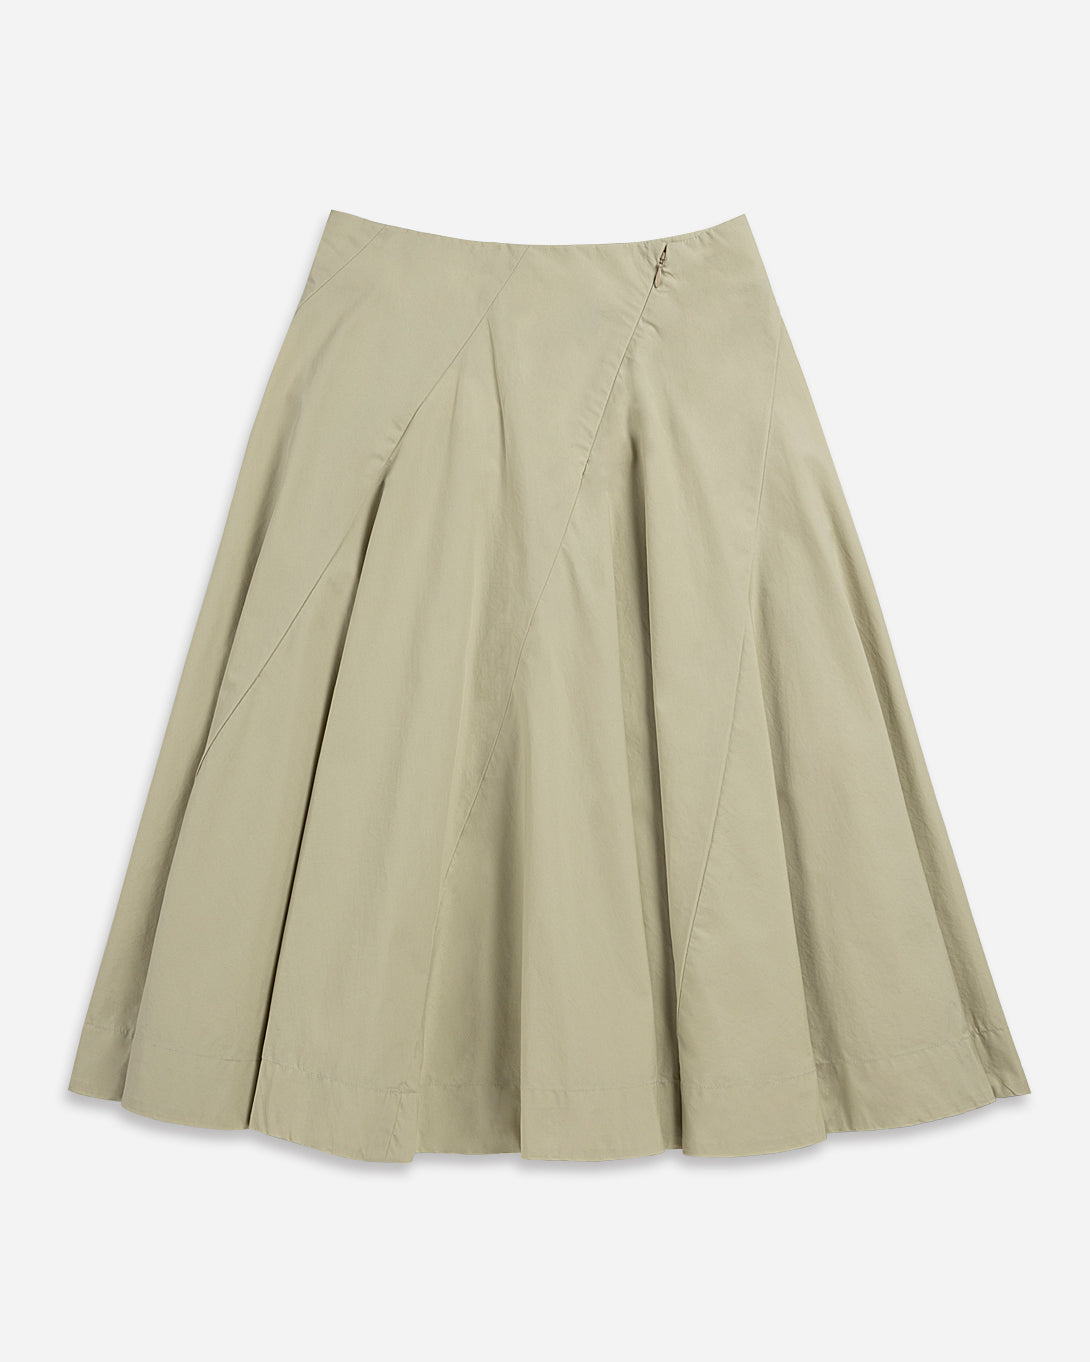 Pumice Stone Spiral Skirt Womens Mid Length Skirt